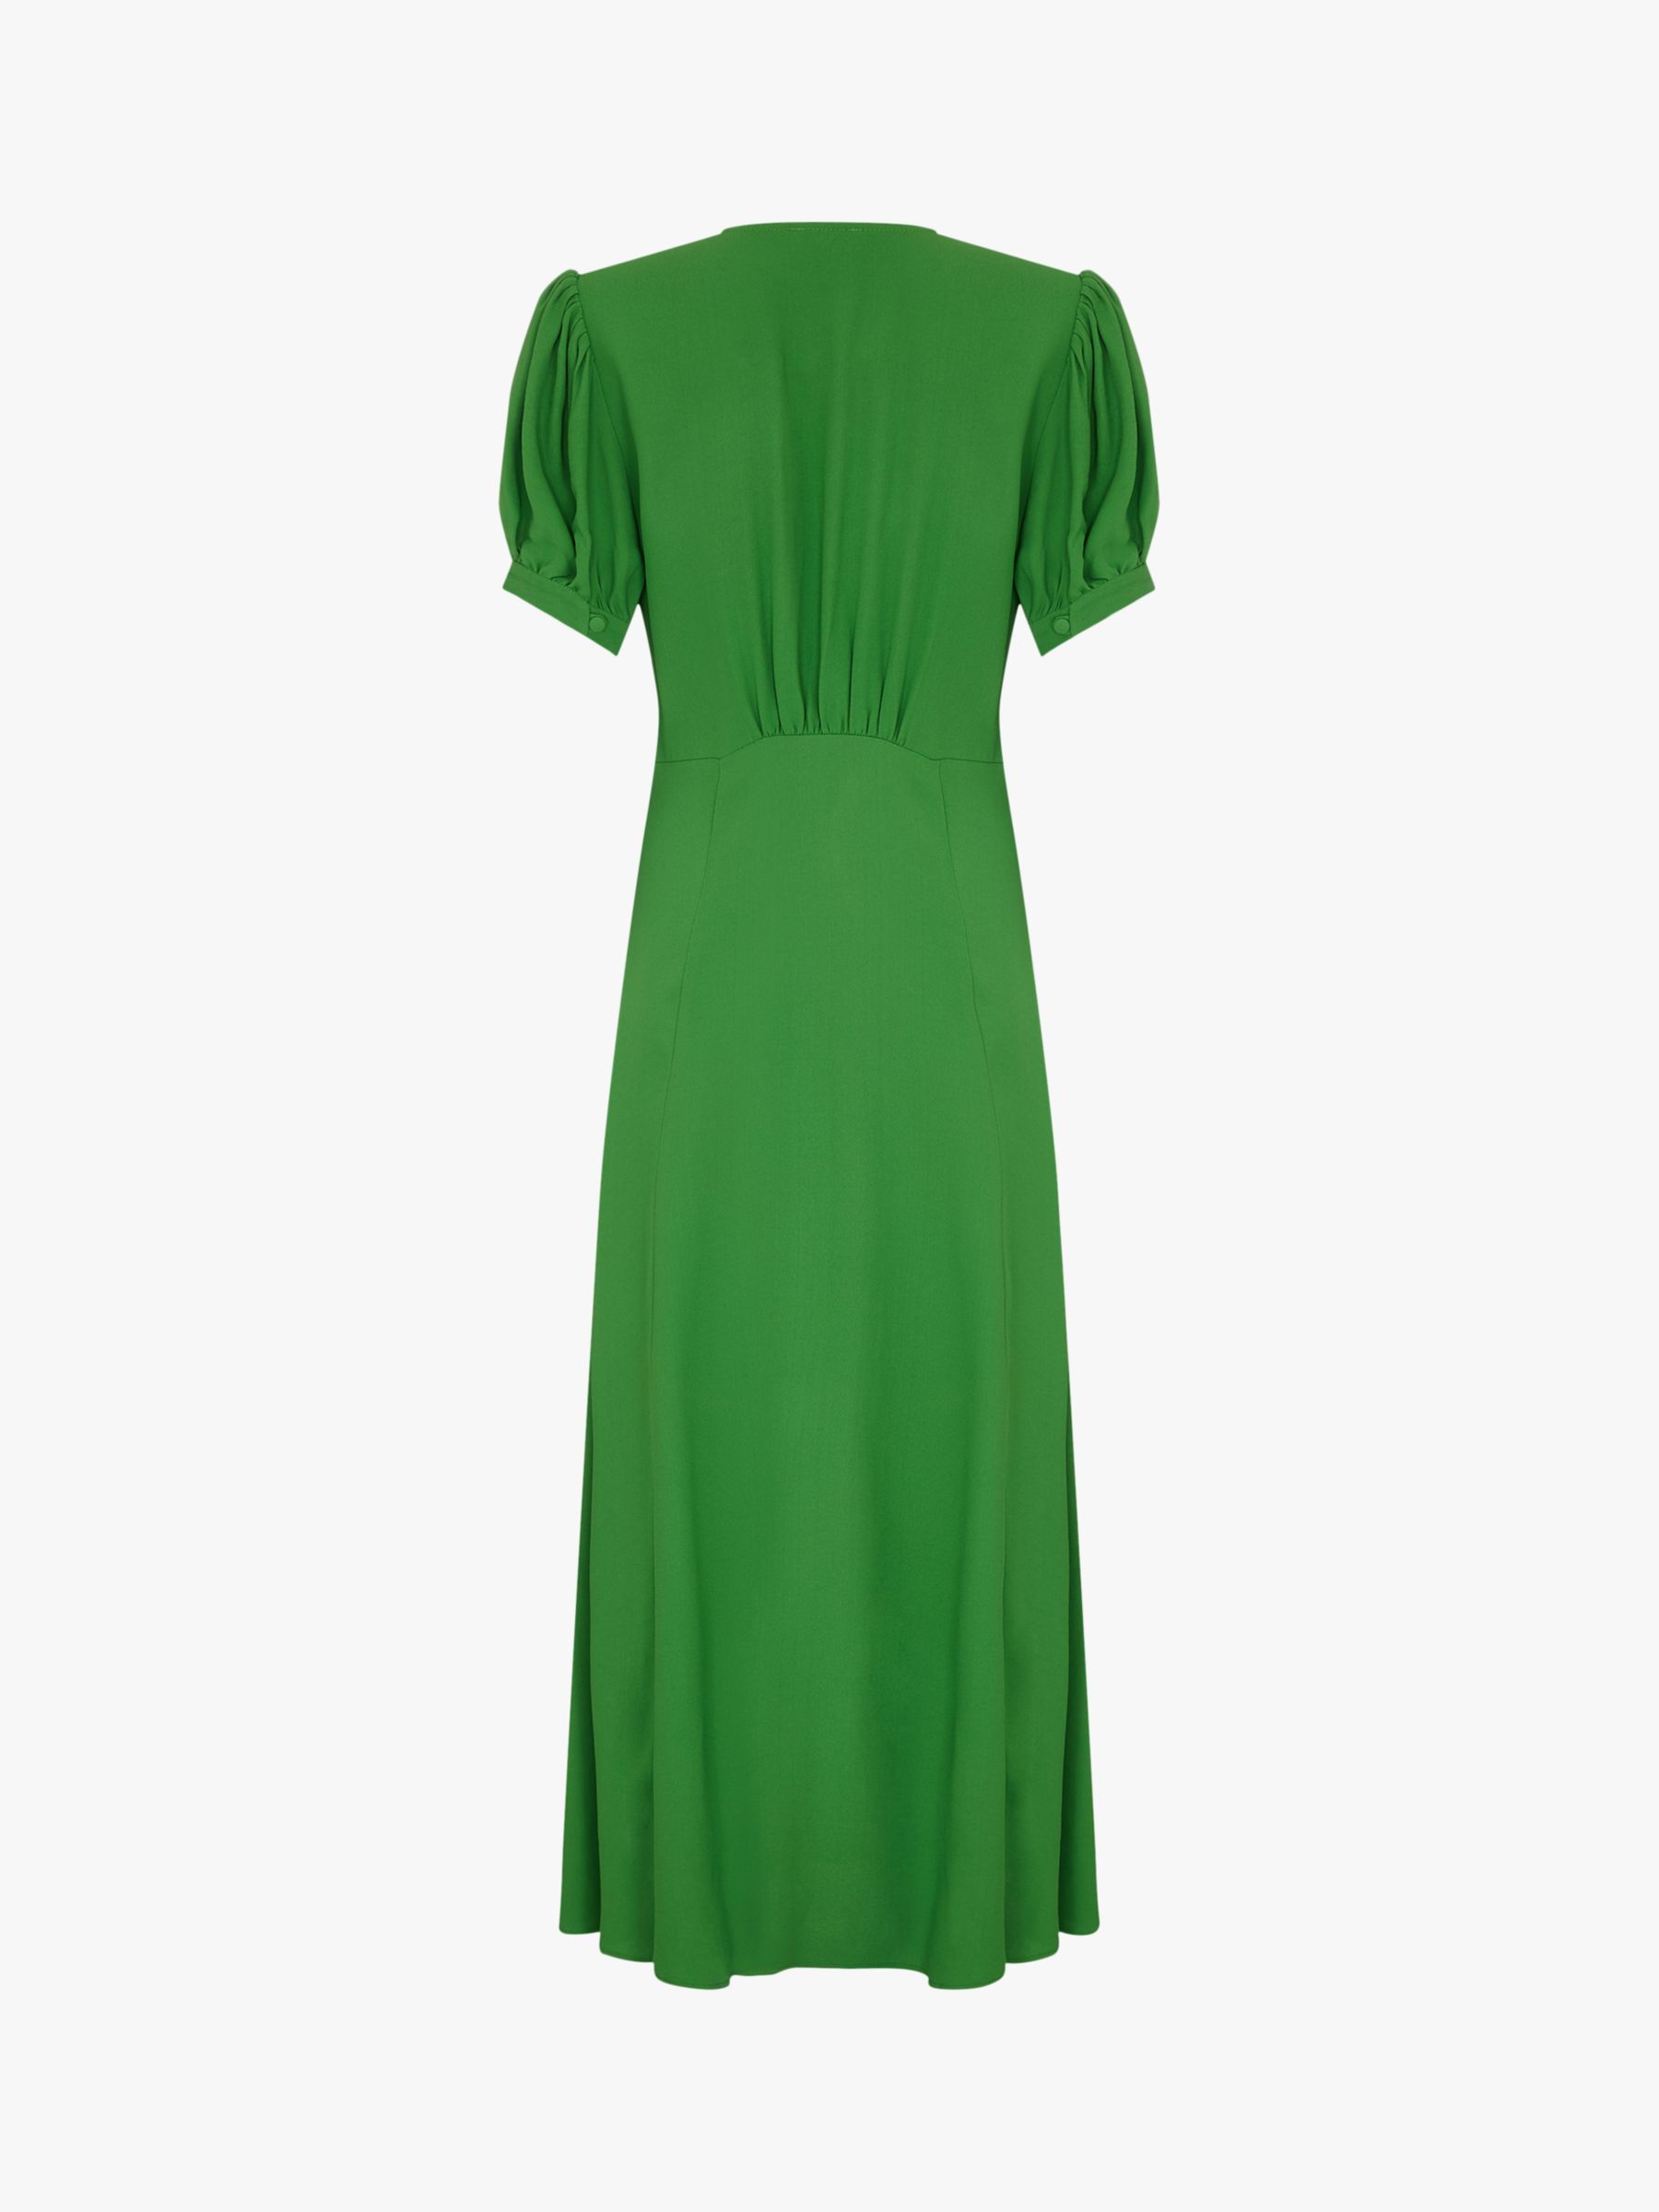 Ghost Margo Satin Back Crepe Dress, Bright Green, XXS